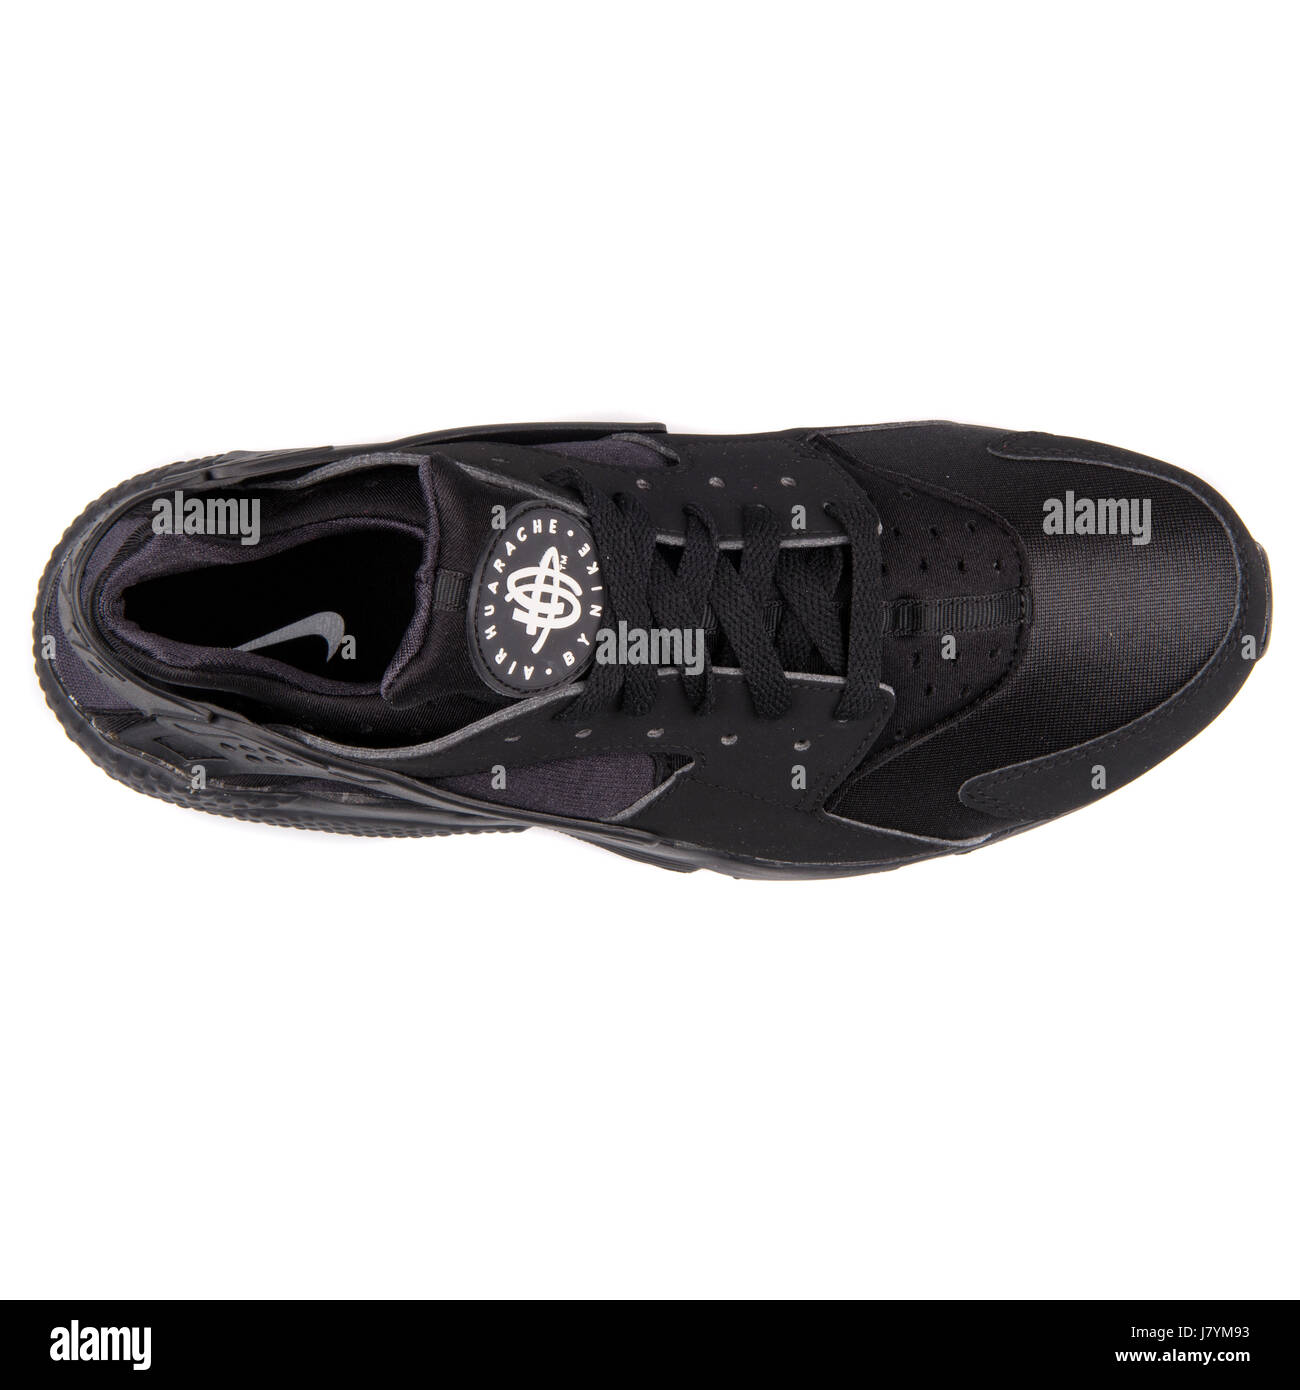 Nike Air Huarache Männer schwarz Running Sneaker - 318429-003  Stockfotografie - Alamy